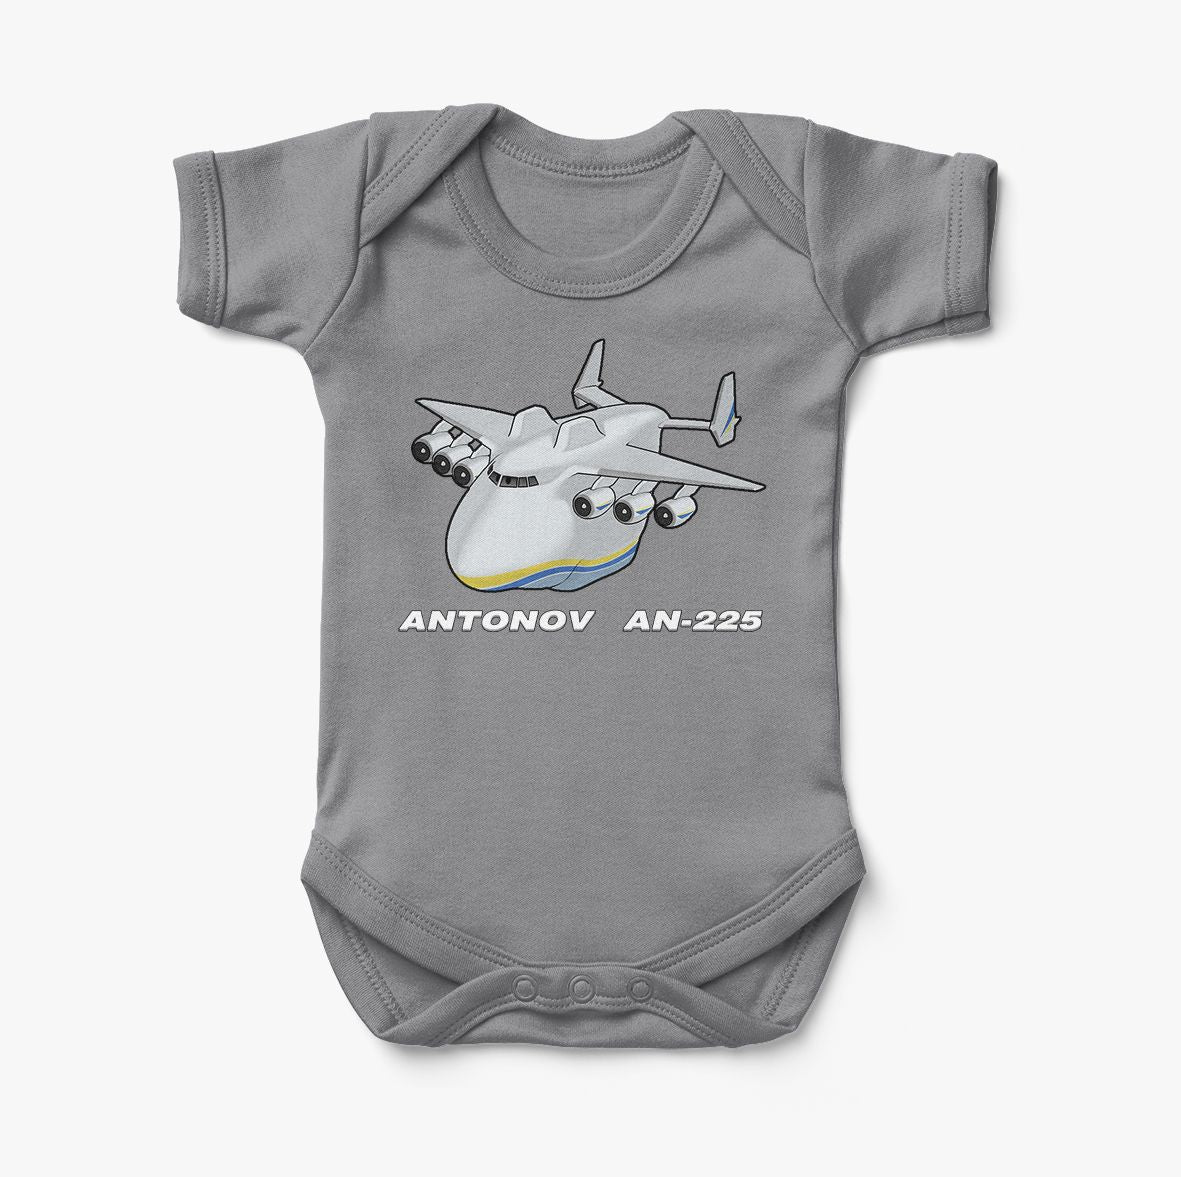 Antonov AN-225 (29) Designed Baby Bodysuits